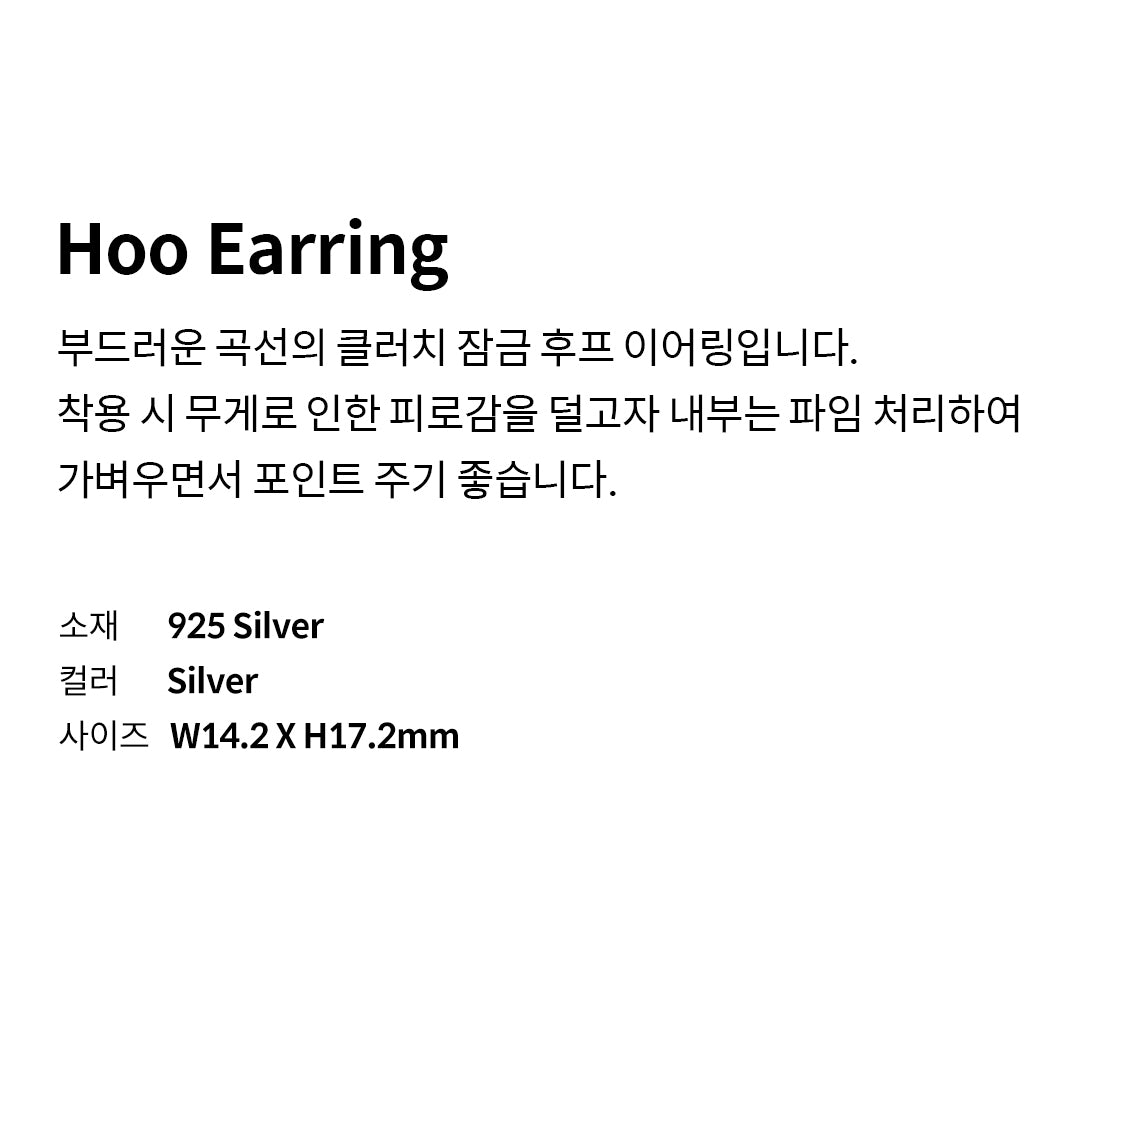 Hoo Earring